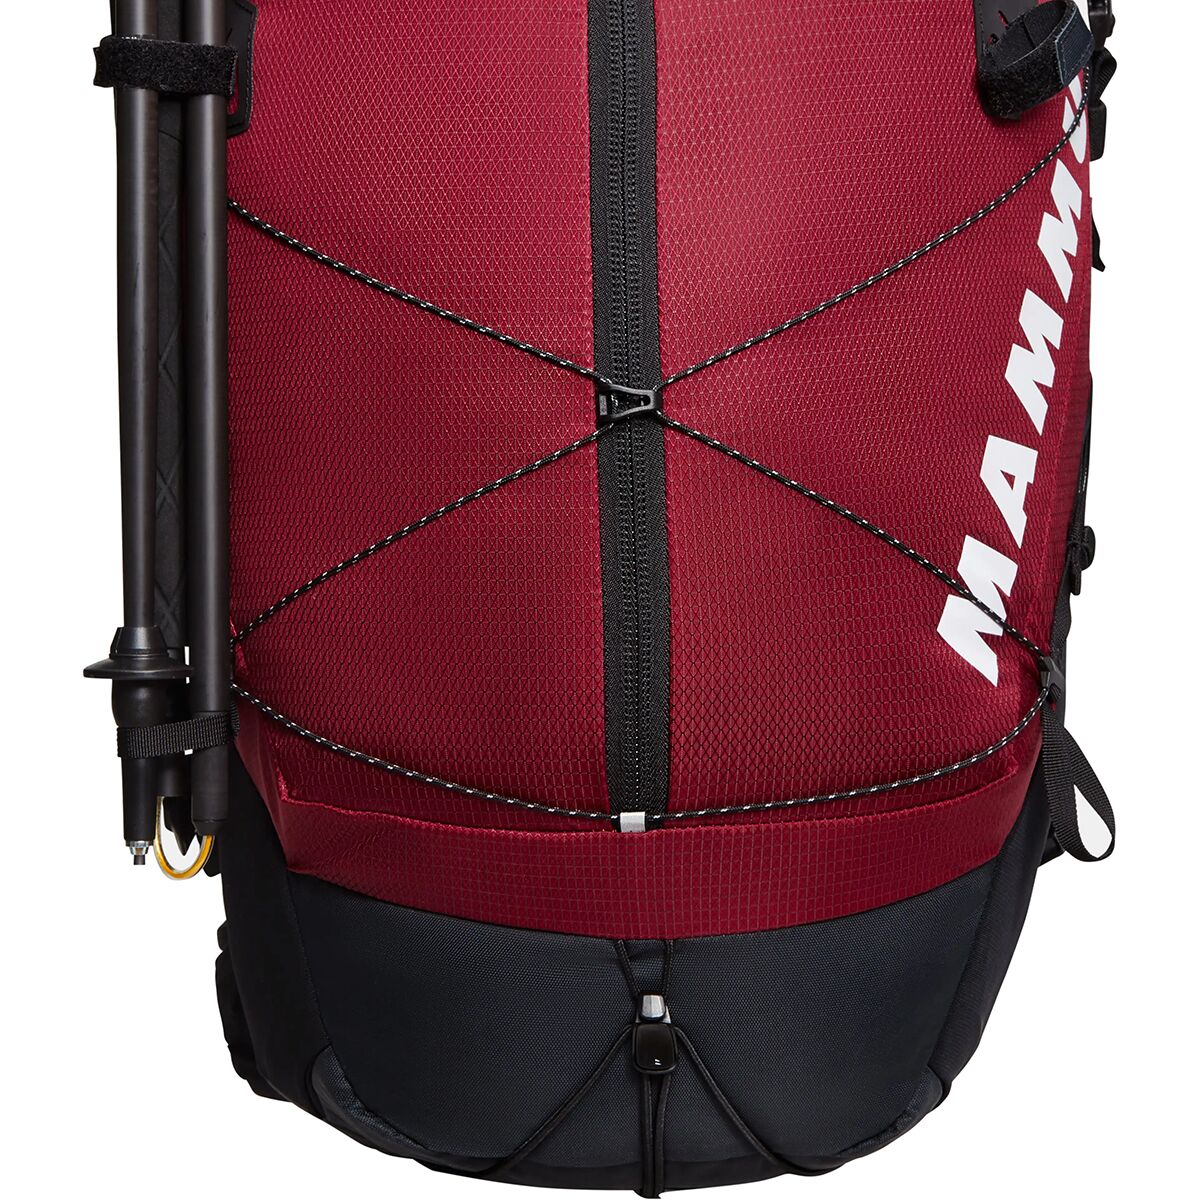 Ducan Spine 28-35L Backpack - Women's